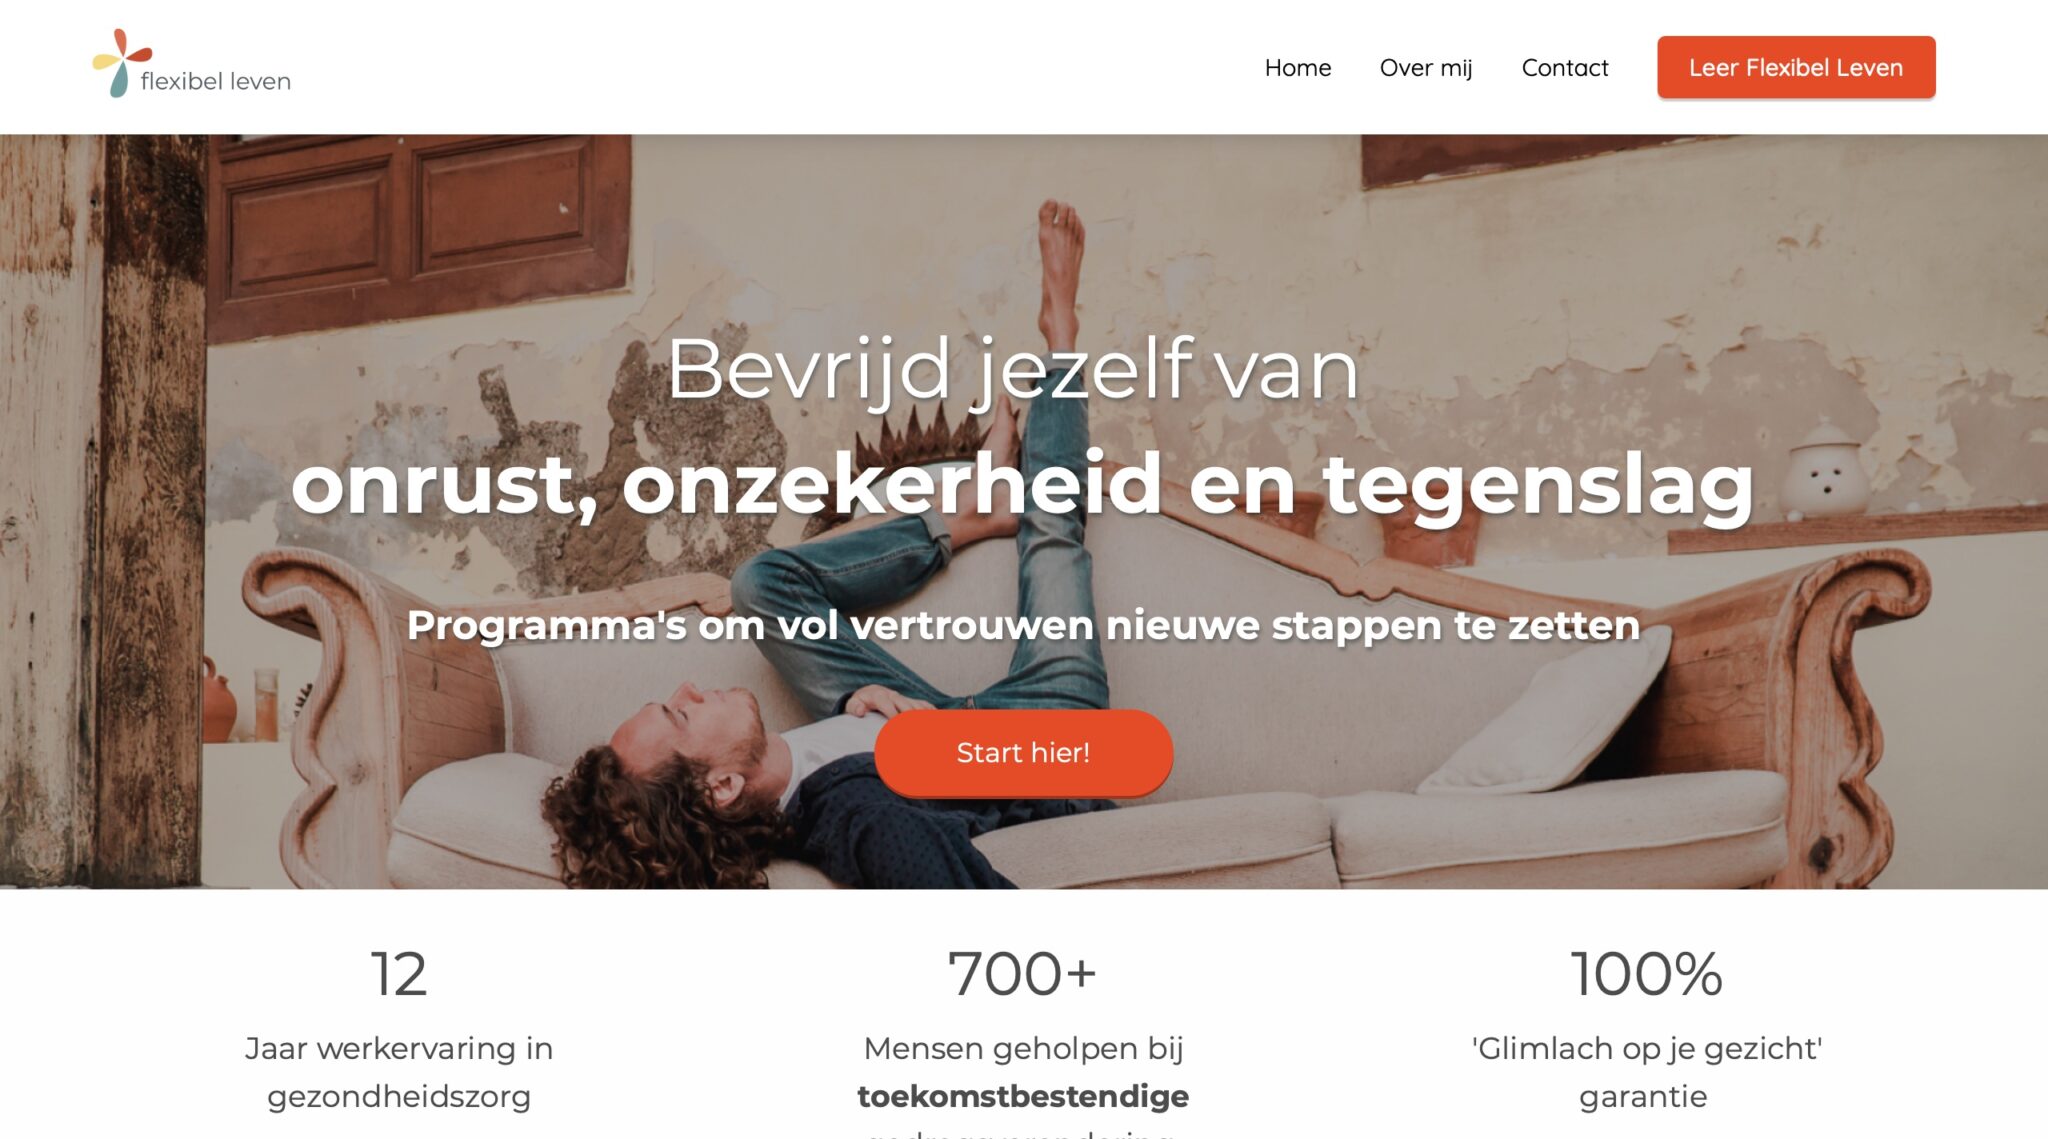 Flexible Living website Dutch version